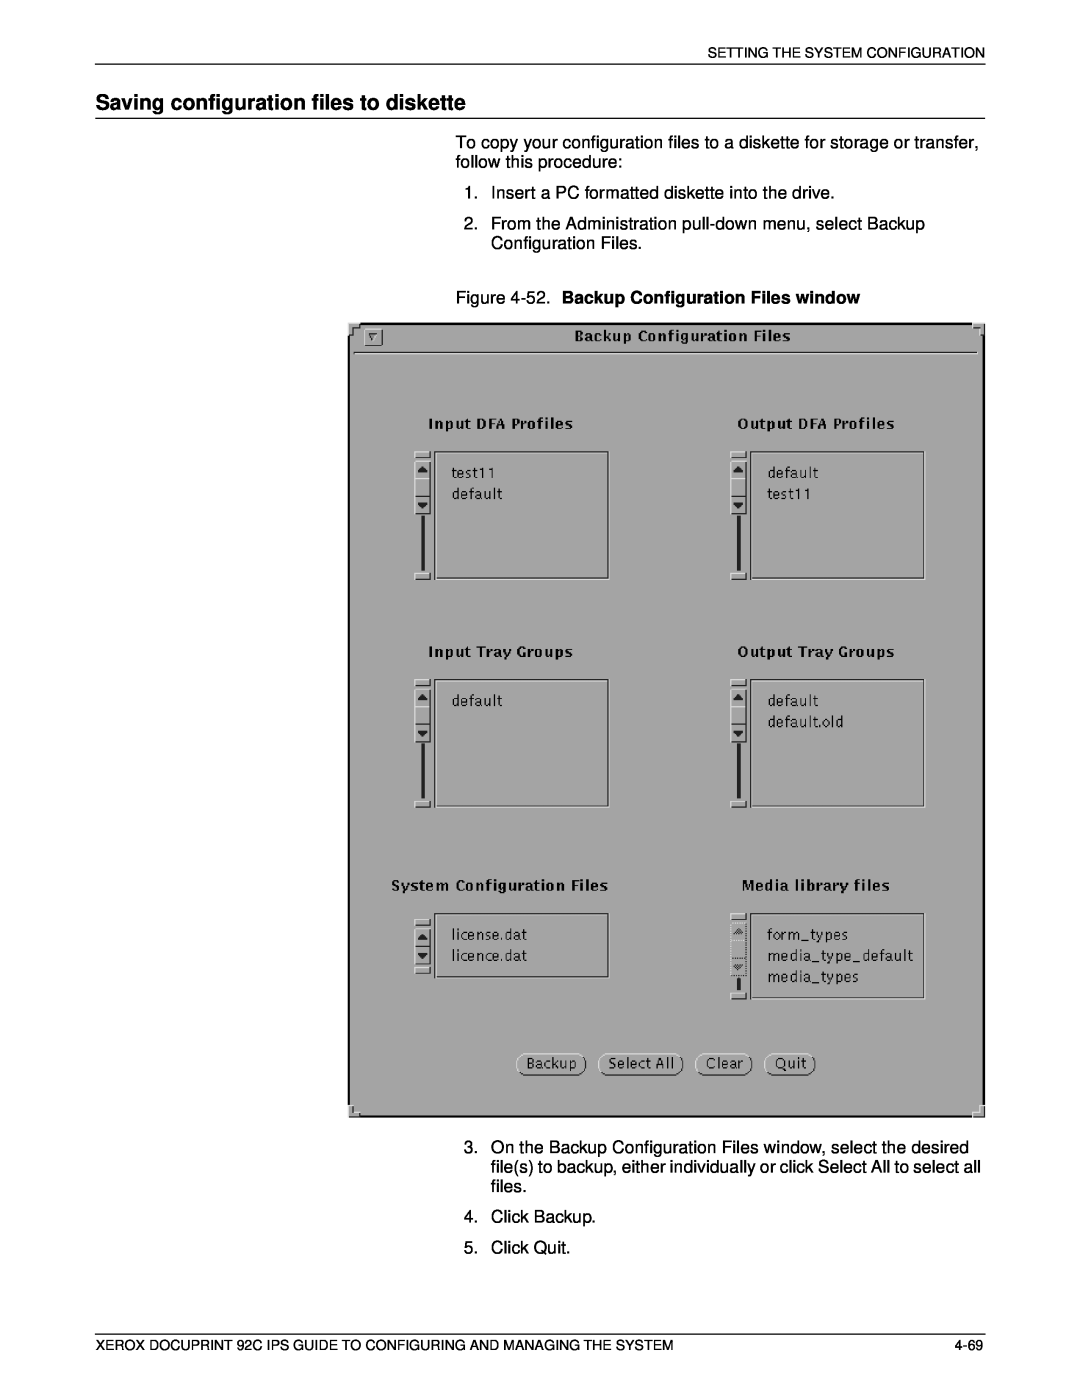 Xerox 92C IPS manual Saving configuration files to diskette, 52. Backup Configuration Files window 